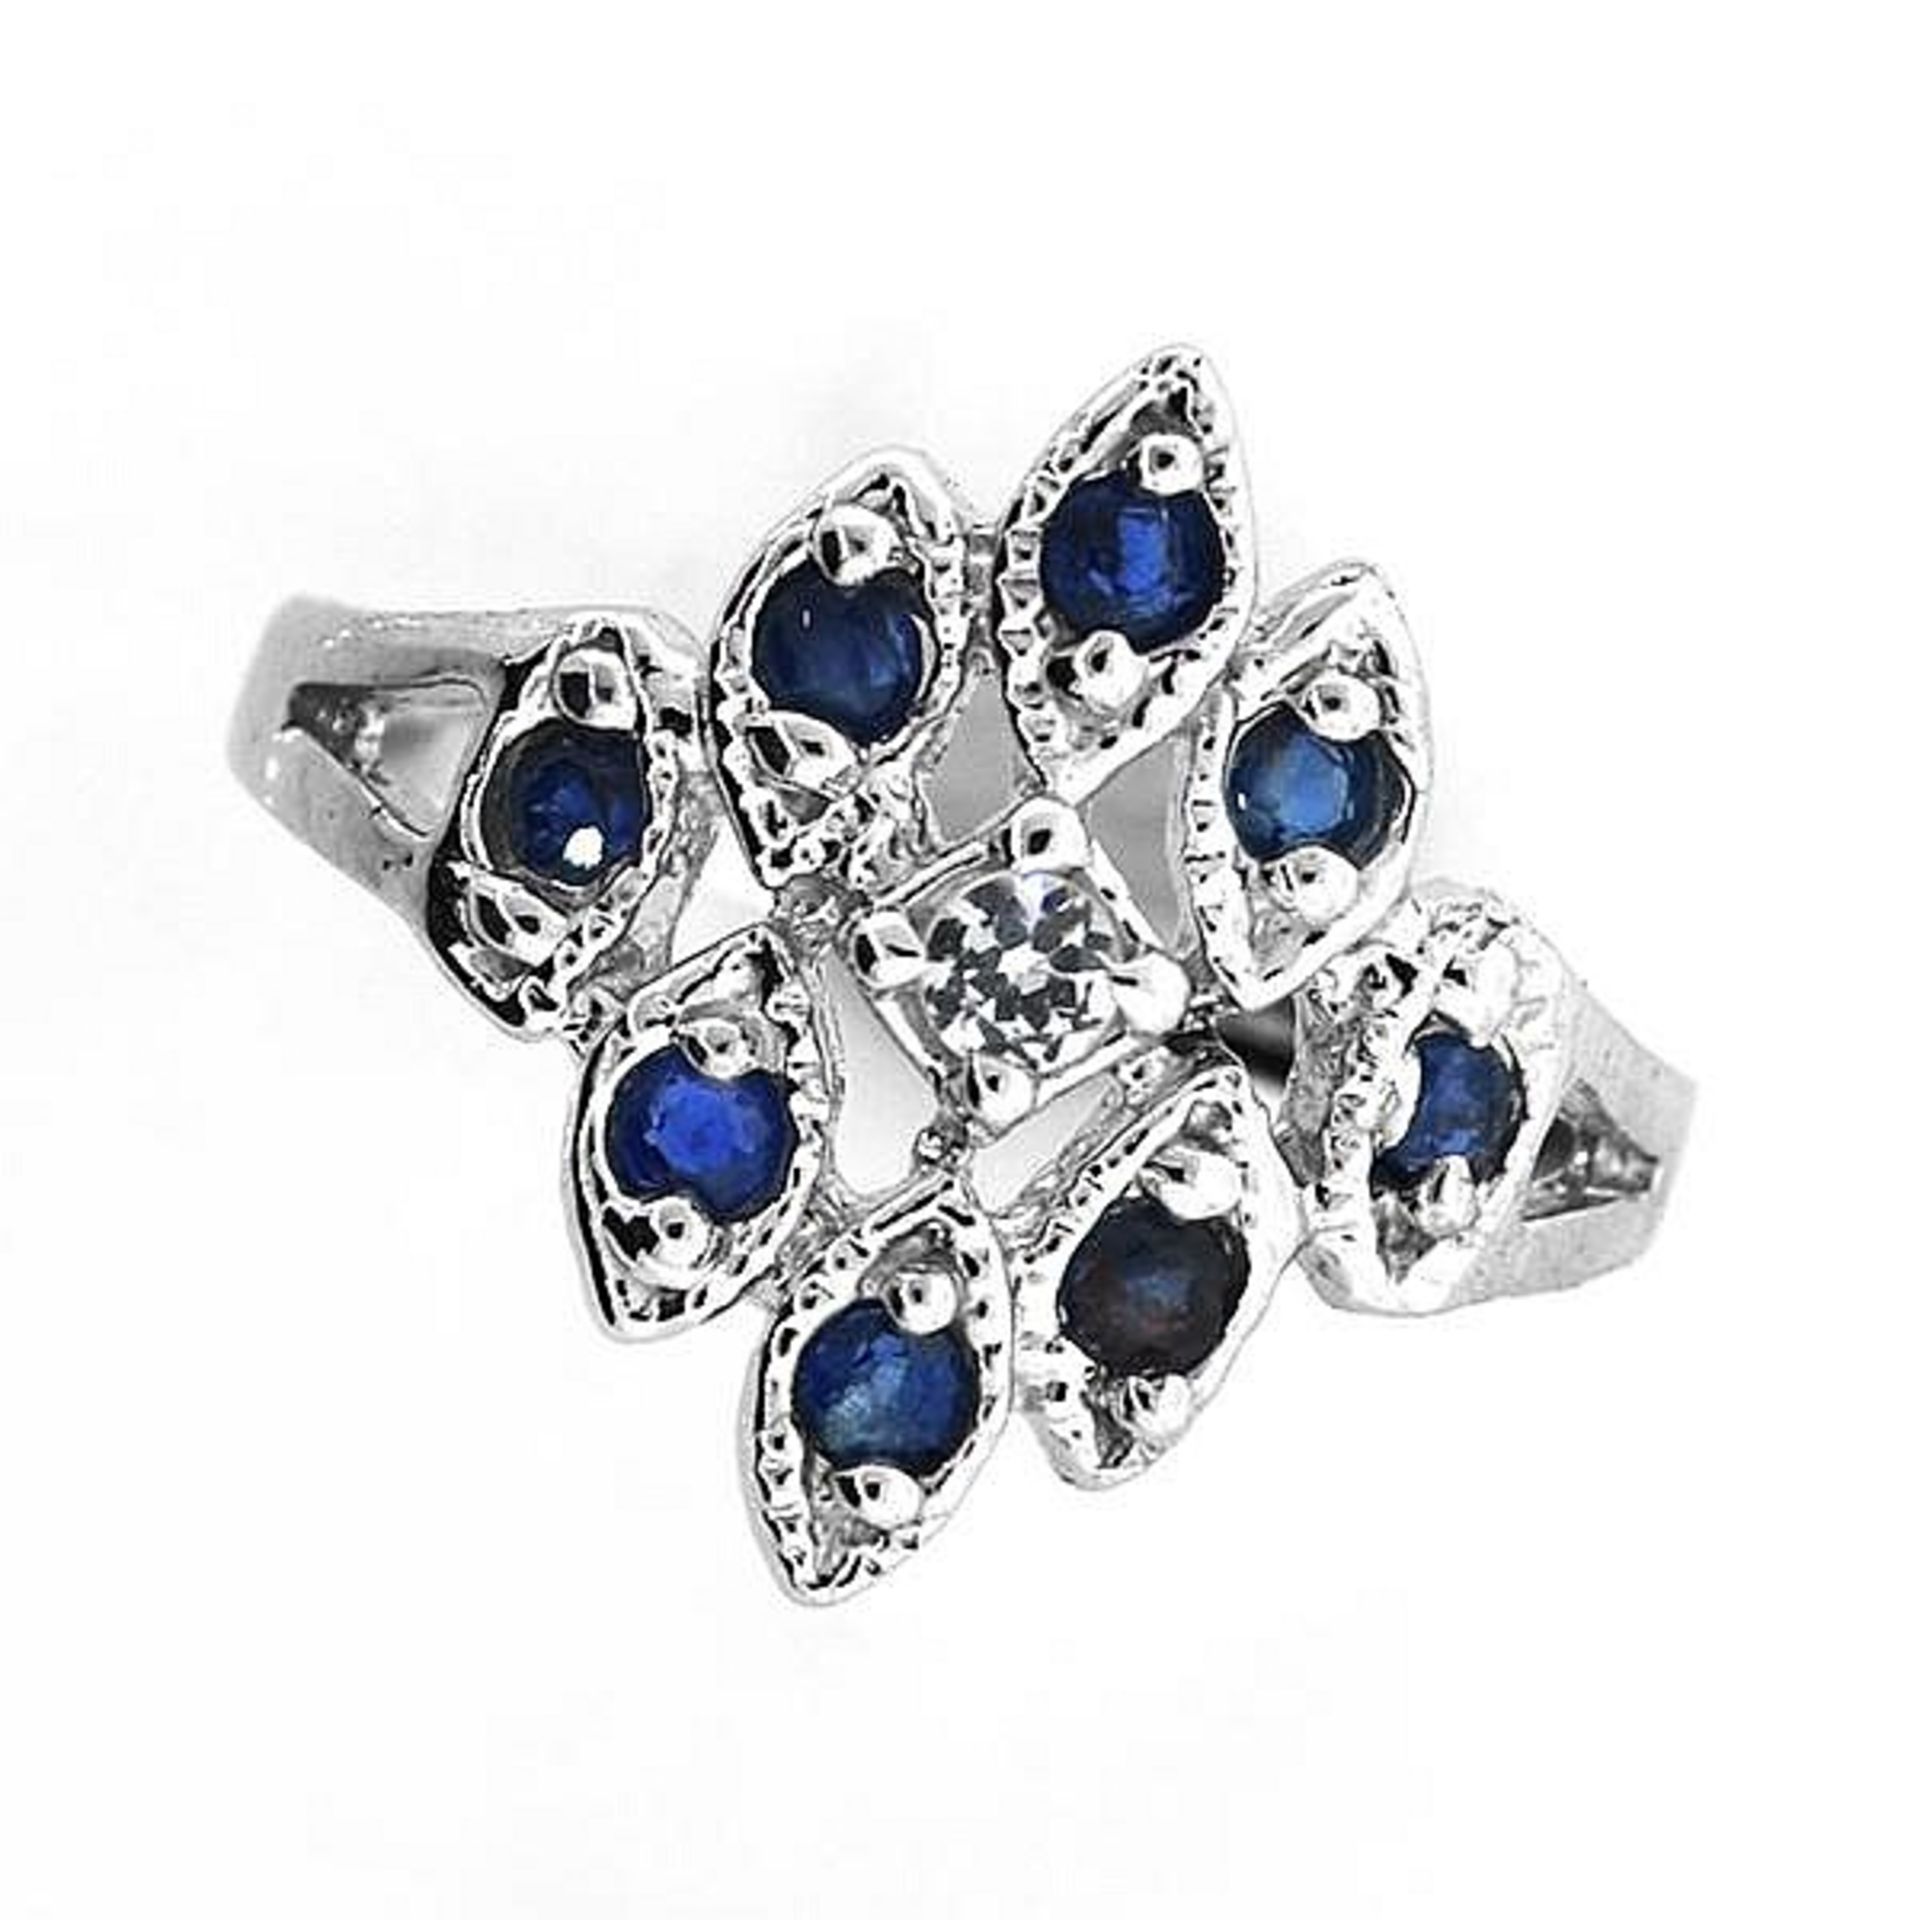 Designer Sebastian 8 x Round Cut Blue Sapphires = 0.40 carat And 1x round cut Topaz = 0.15 carat